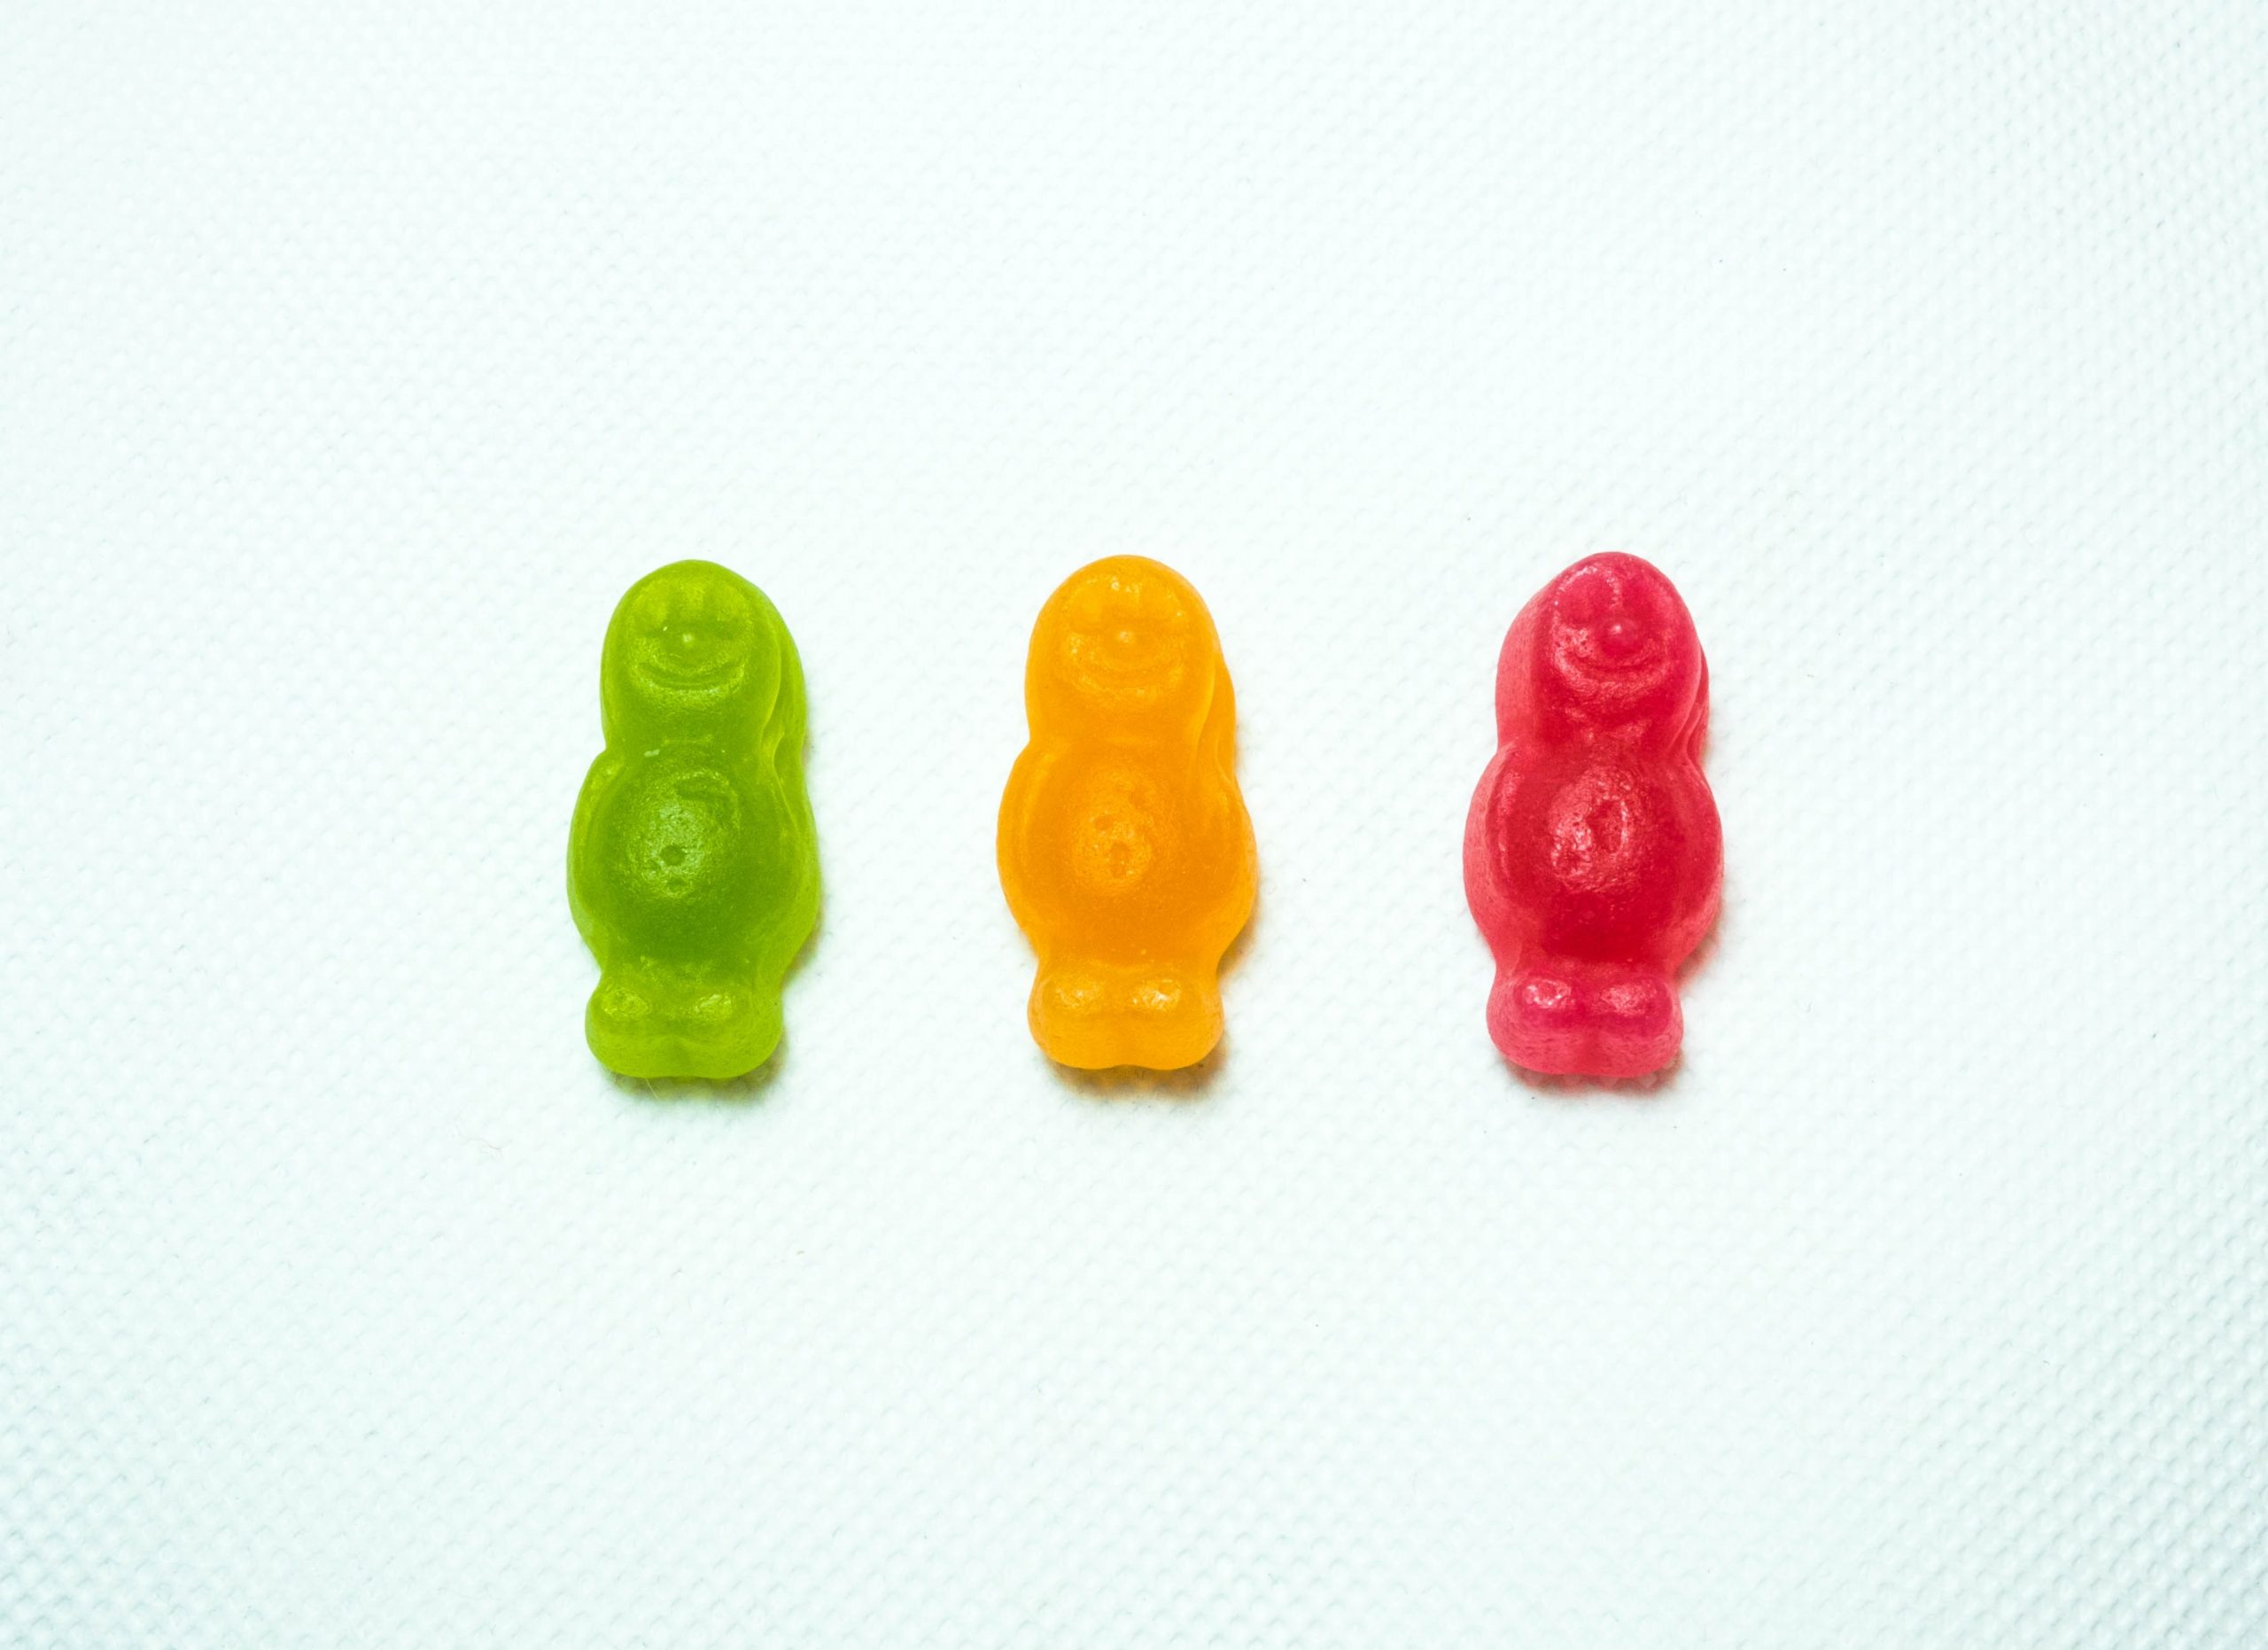 Three gummy men candies in a row on a white background